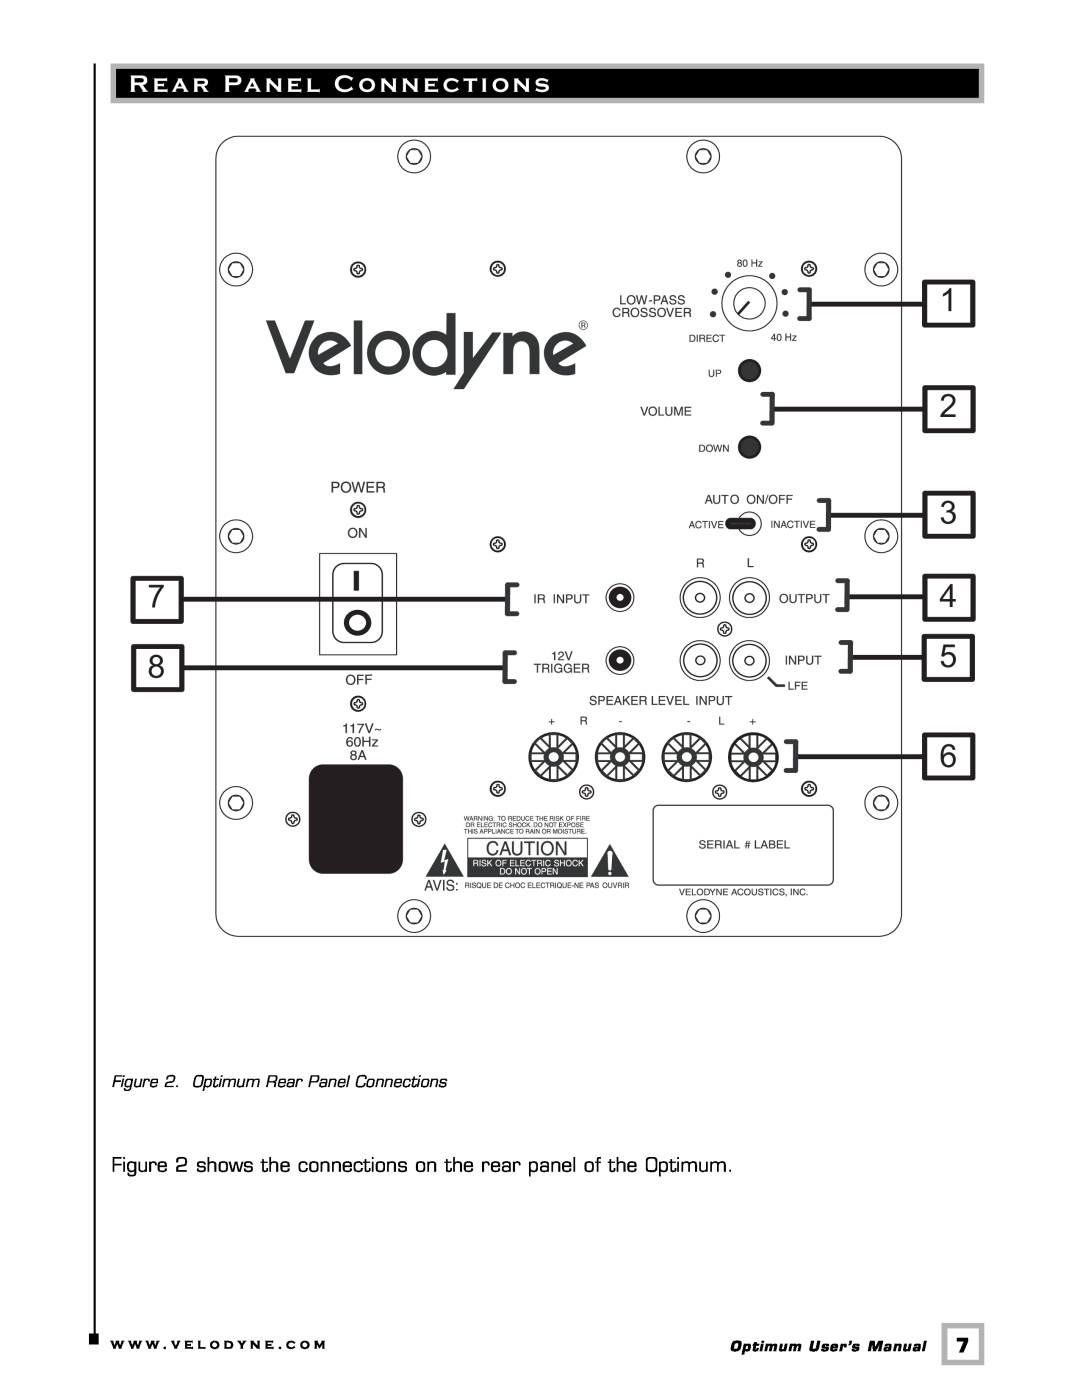 Velodyne Acoustics 10, 12, 8 user manual Optimum Rear Panel Connections, w w w . v e l o d y n e . c o m 